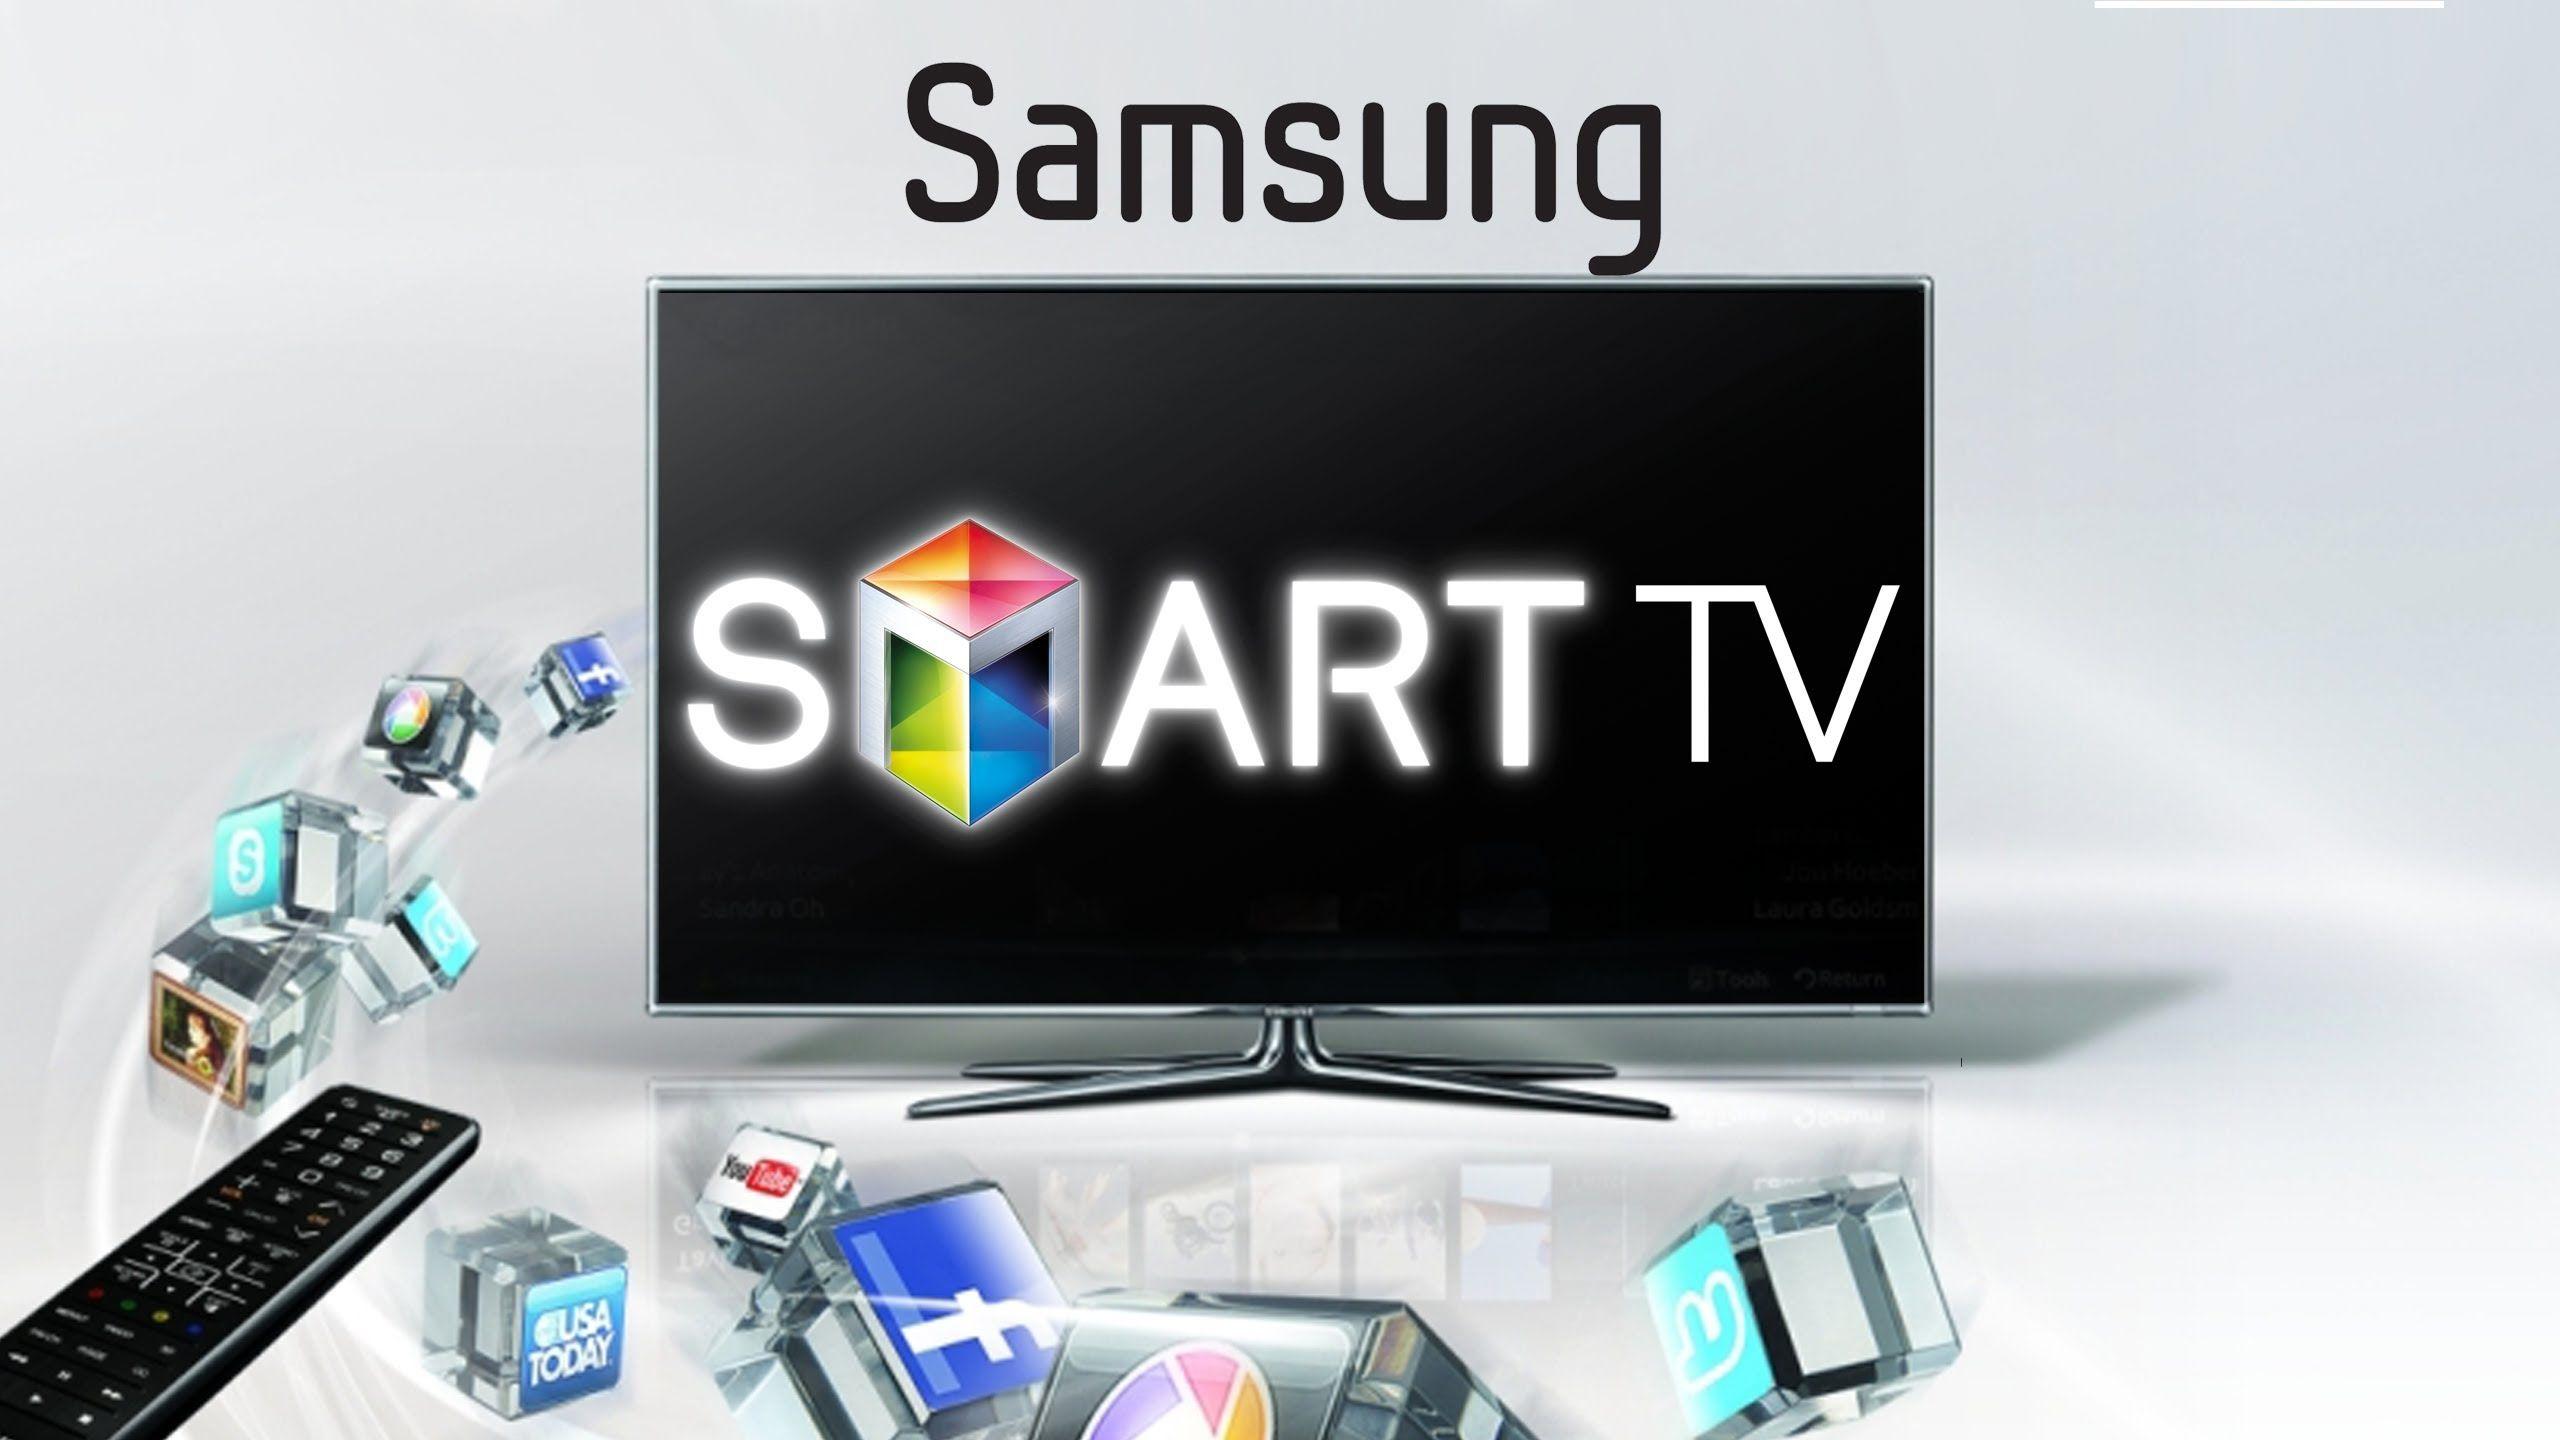 Samsung series 6 slim LED Active 3D TV Smart Hub quick review